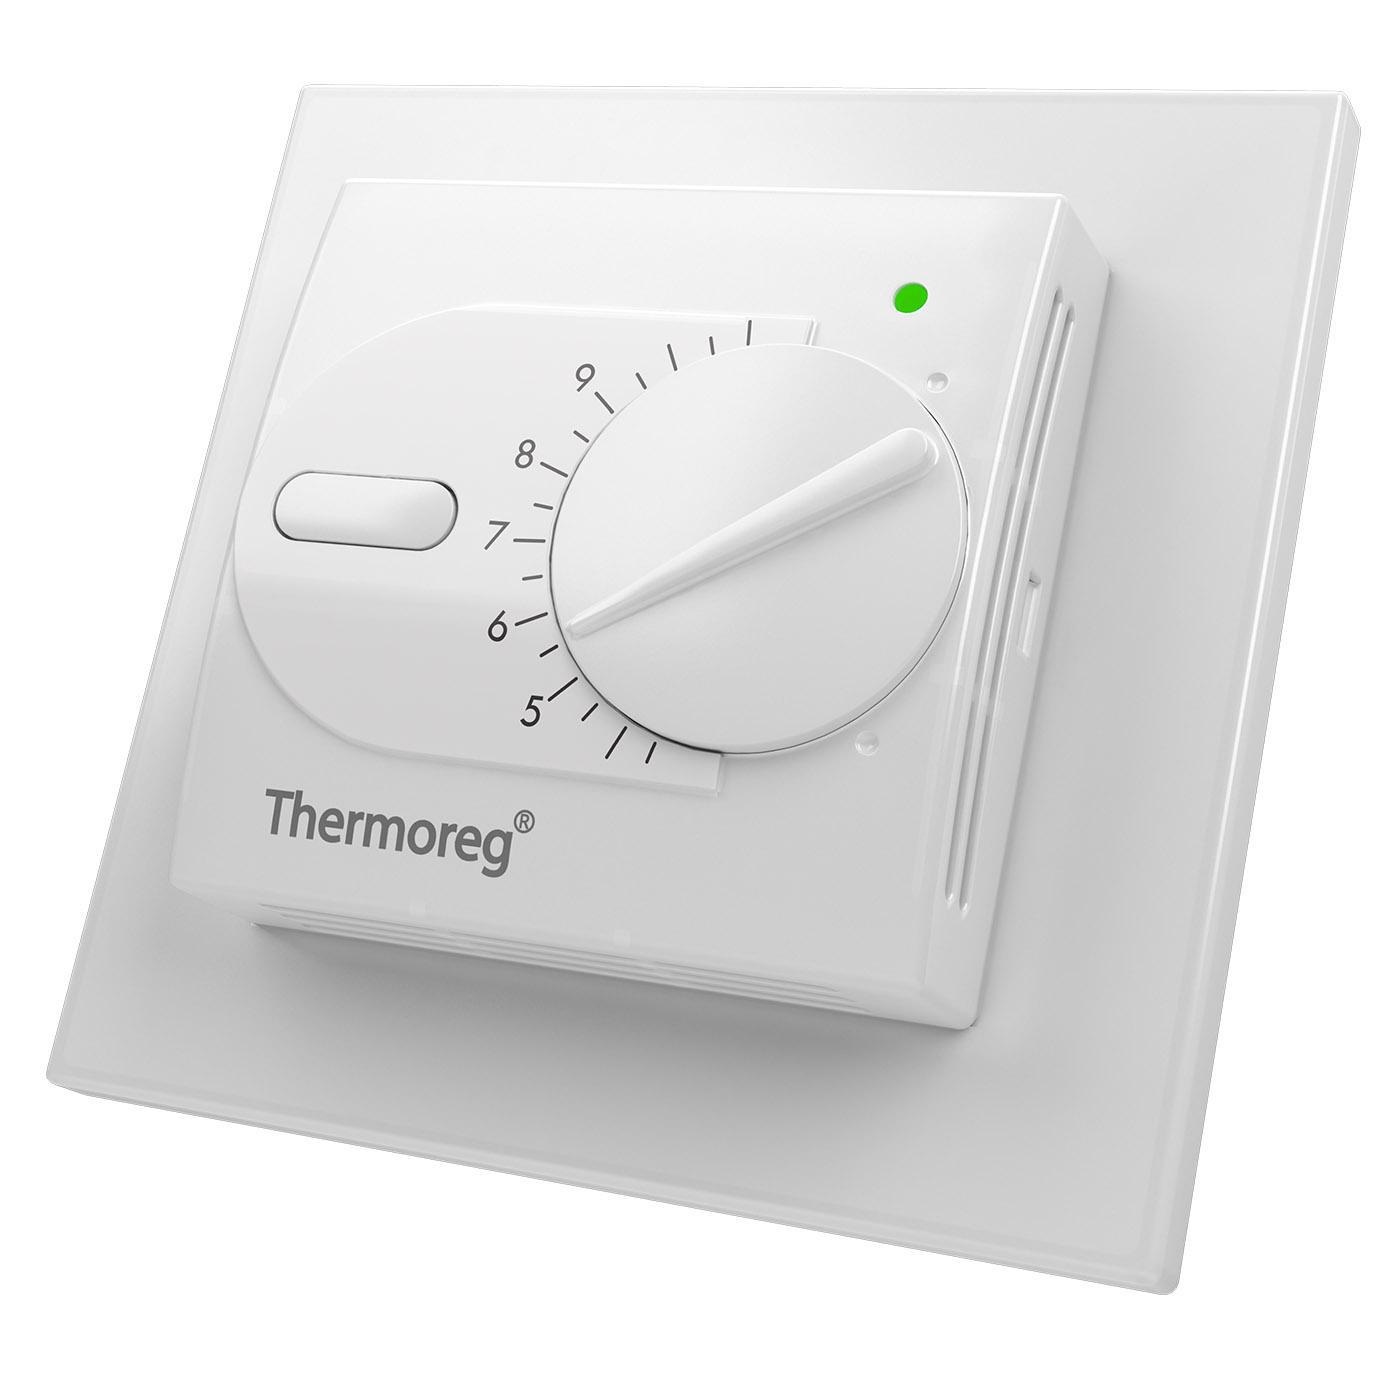 90021396 Терморегулятор для теплого пола reg TI-200 Design механический цвет белый STLM-0087766 THERMO